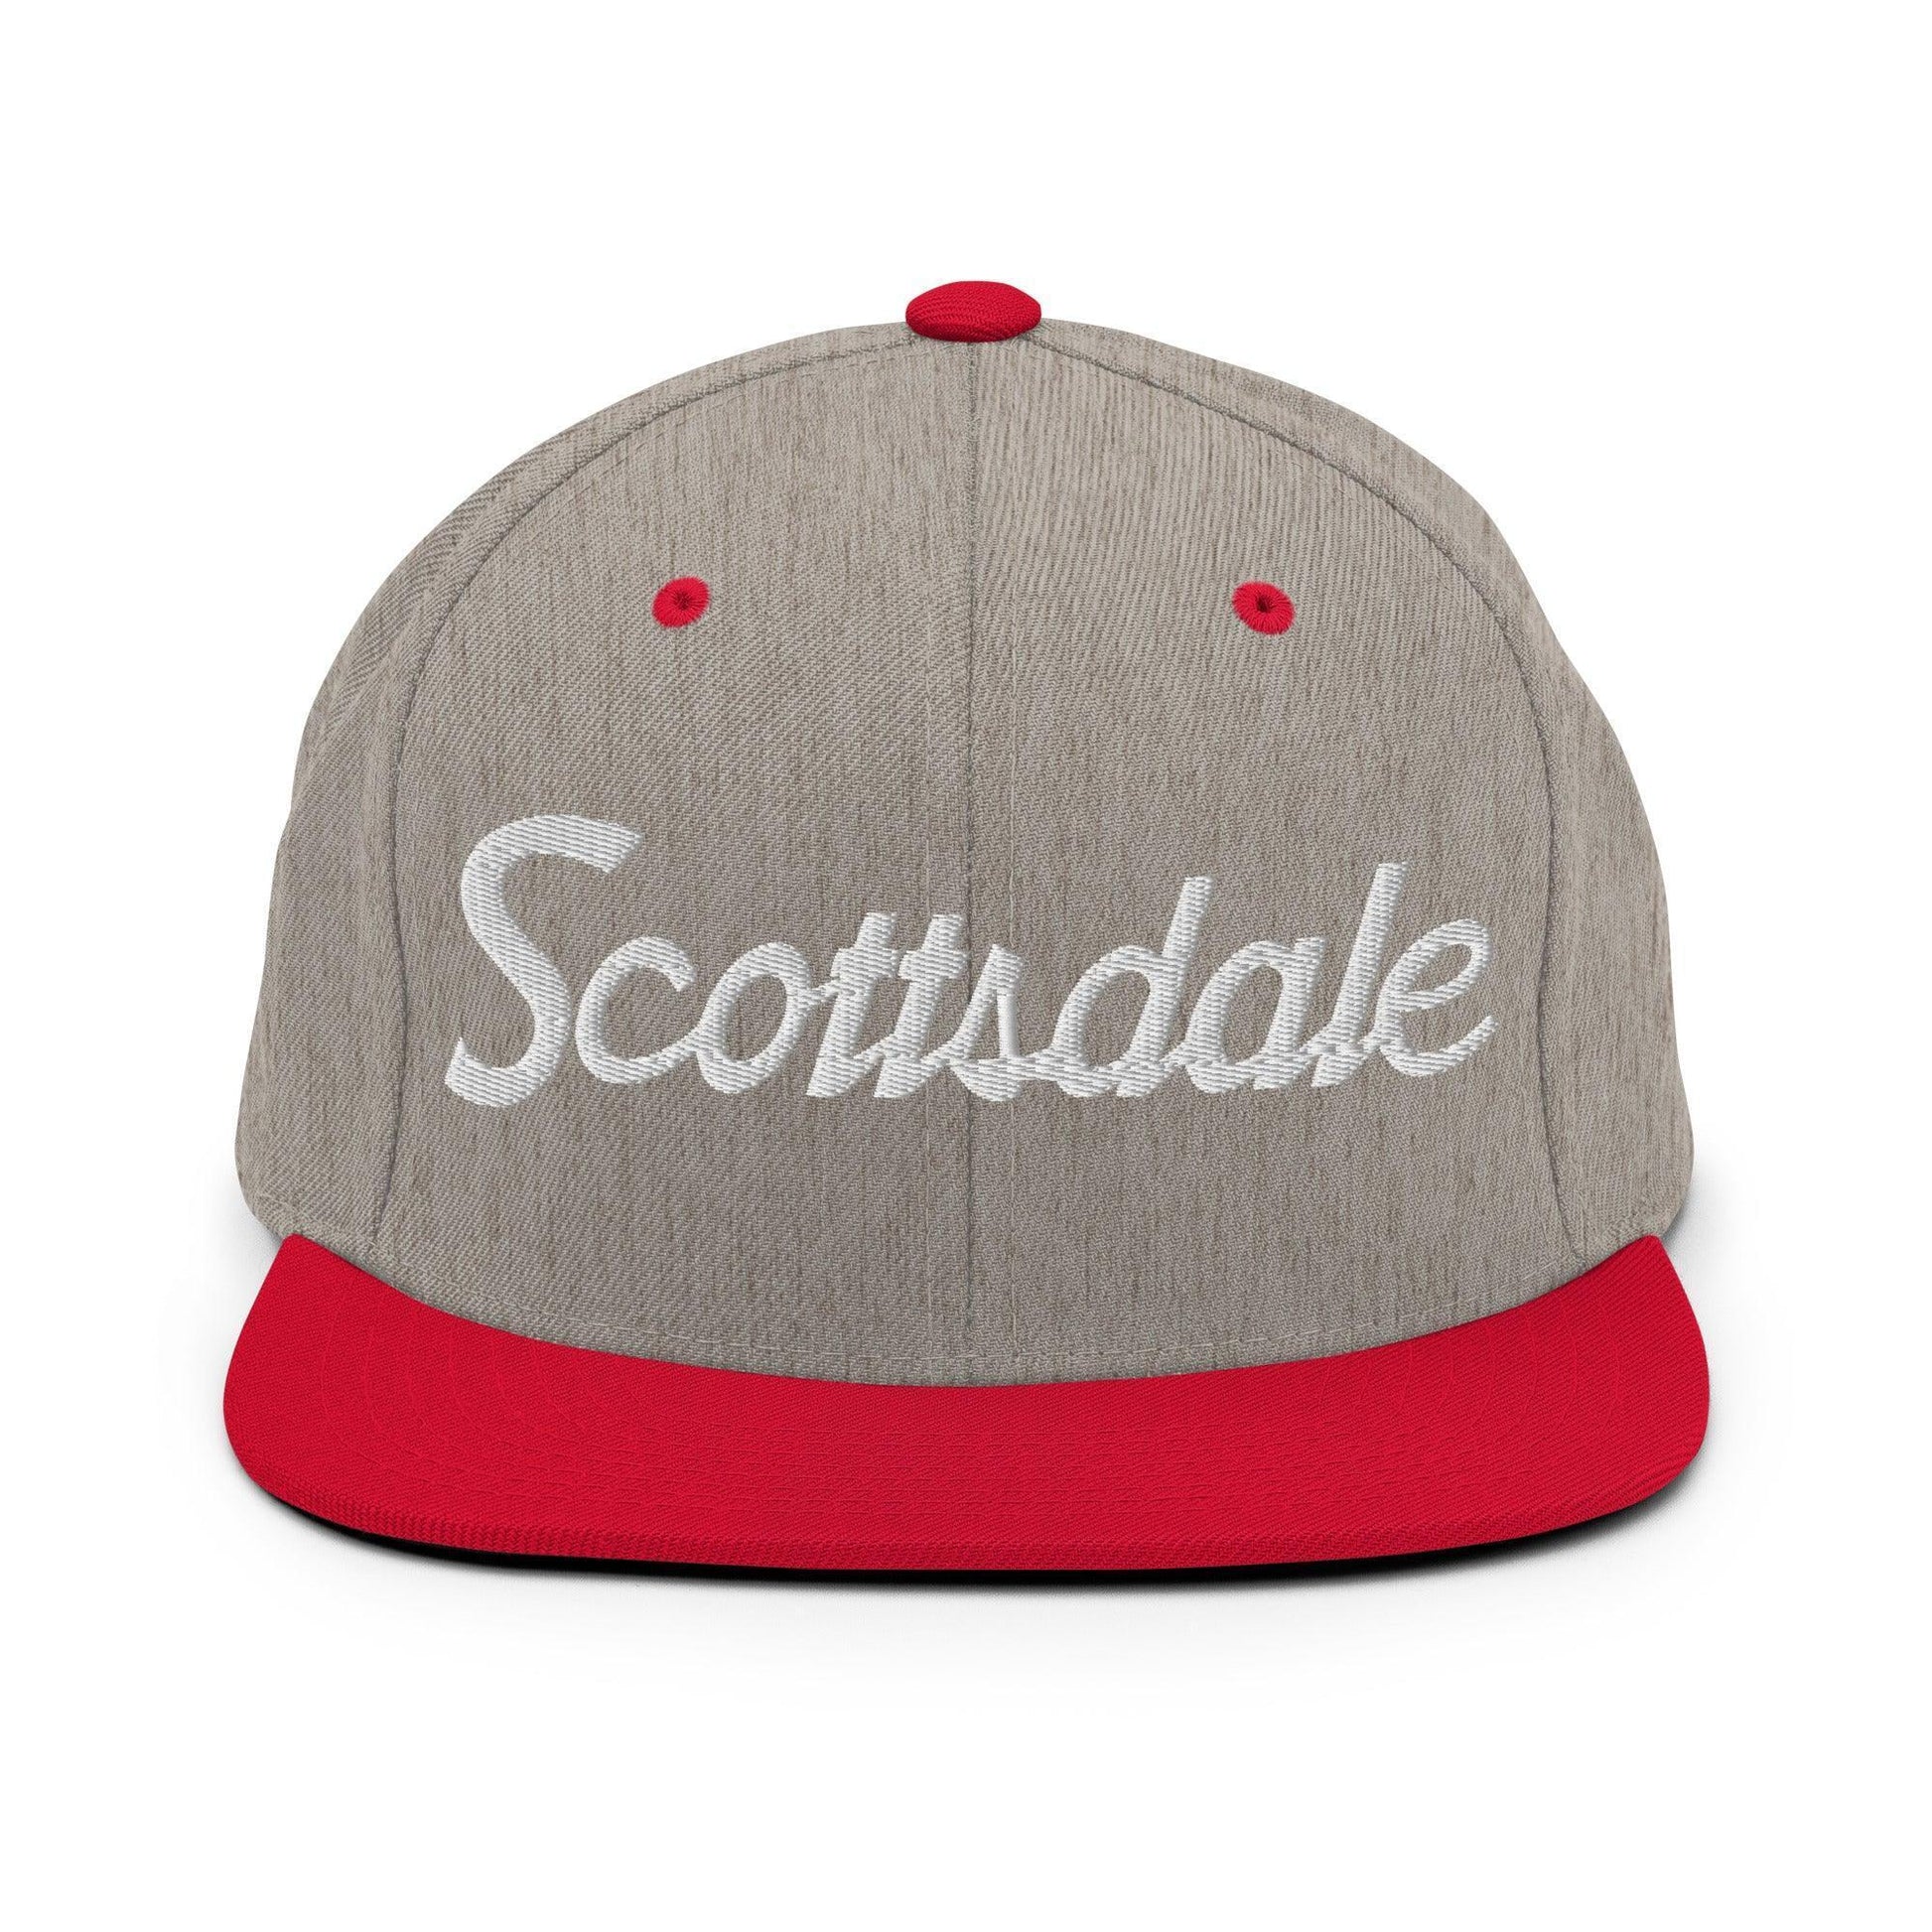 Scottsdale Script Snapback Hat Heather Grey/ Red